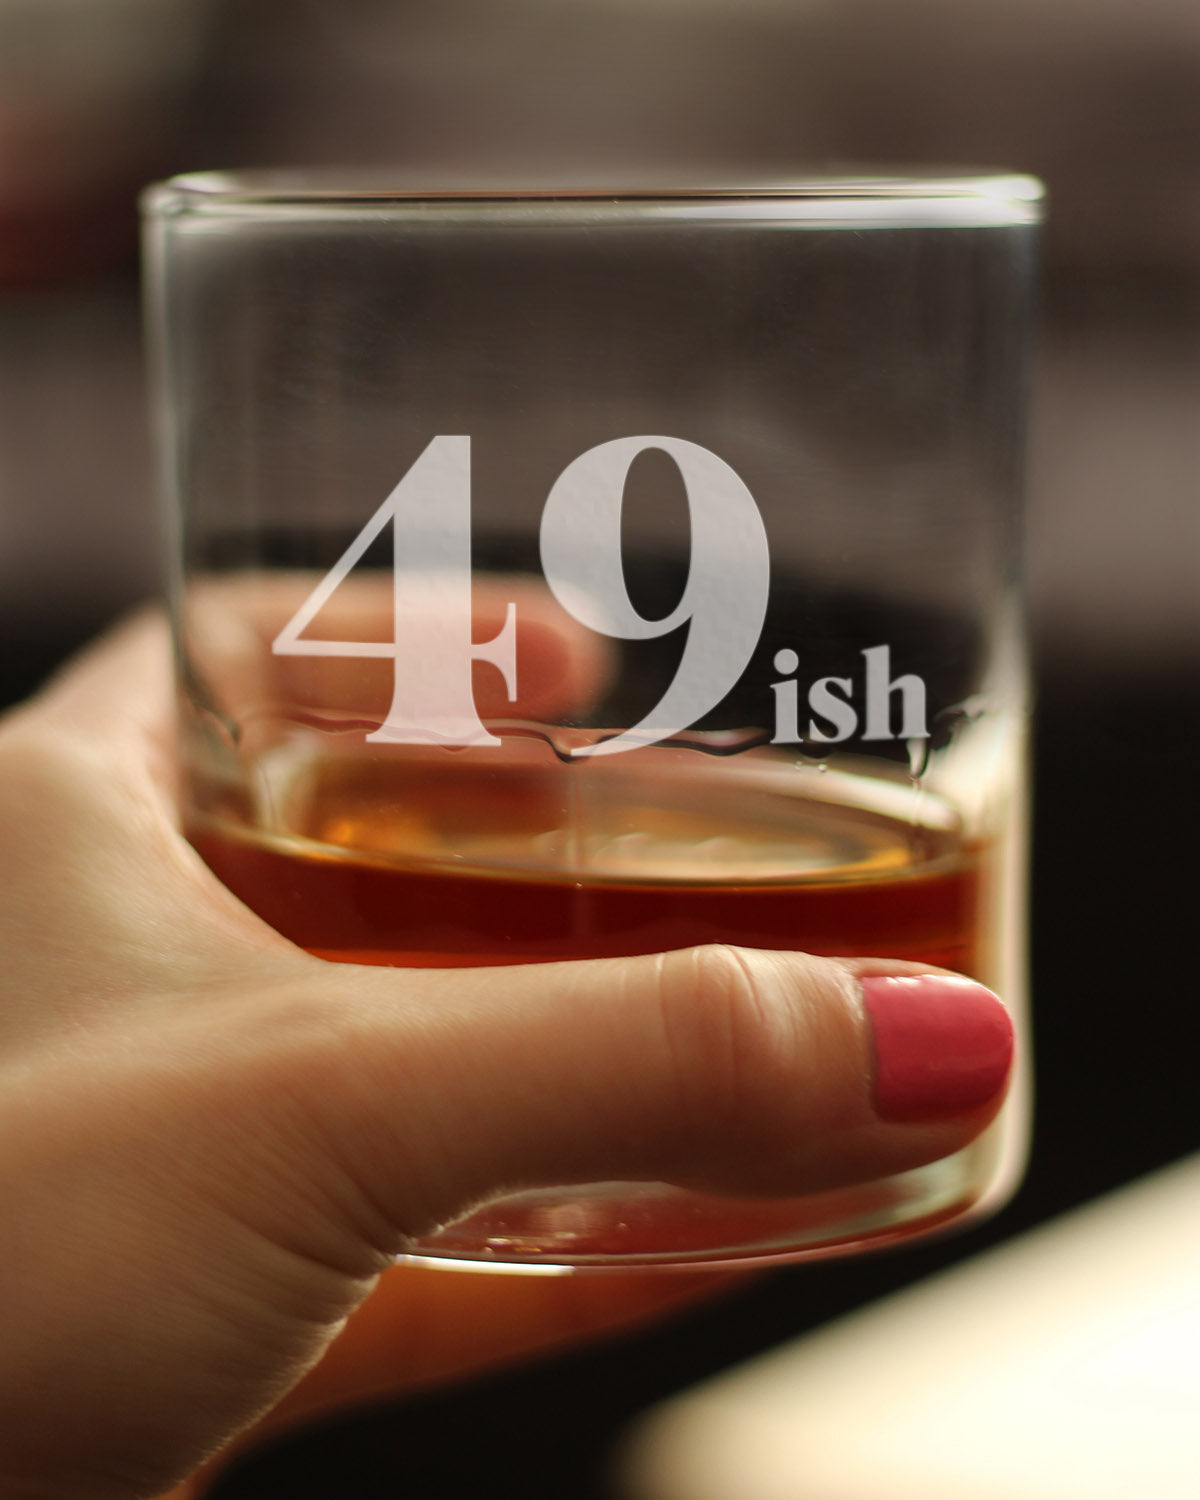 49ish - Funny 50th Birthday Whiskey Rocks Glass Gifts for Men &amp; Women Turning 50 - Fun Whisky Drinking Tumbler